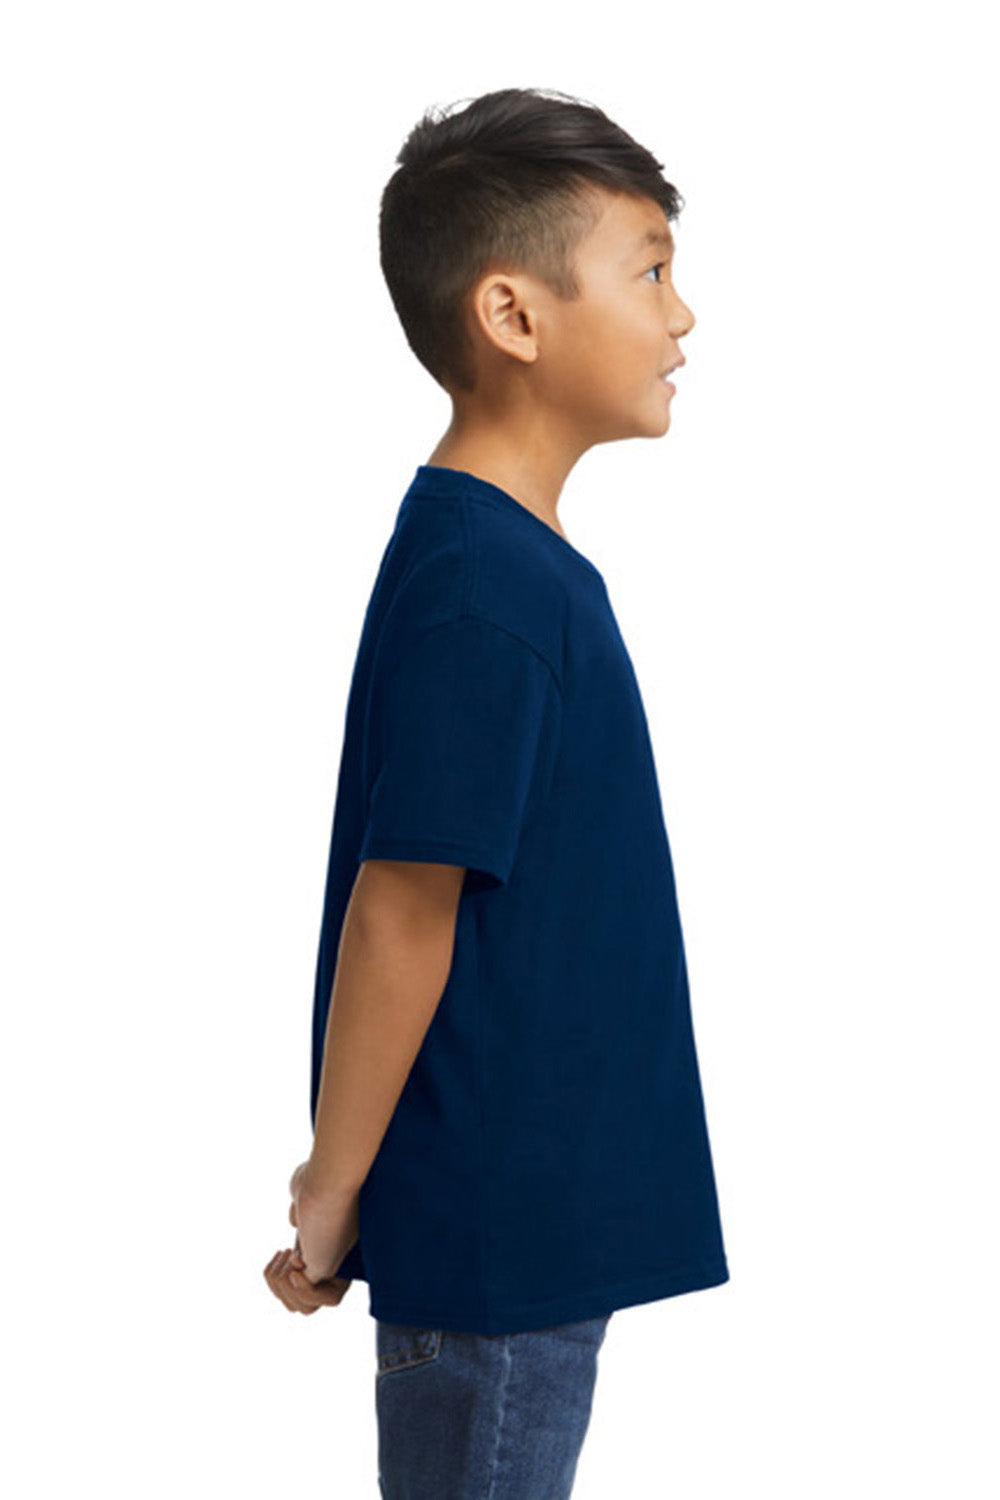 Gildan G650B Youth Softstyle Short Sleeve Crewneck T-Shirt Navy Blue Side